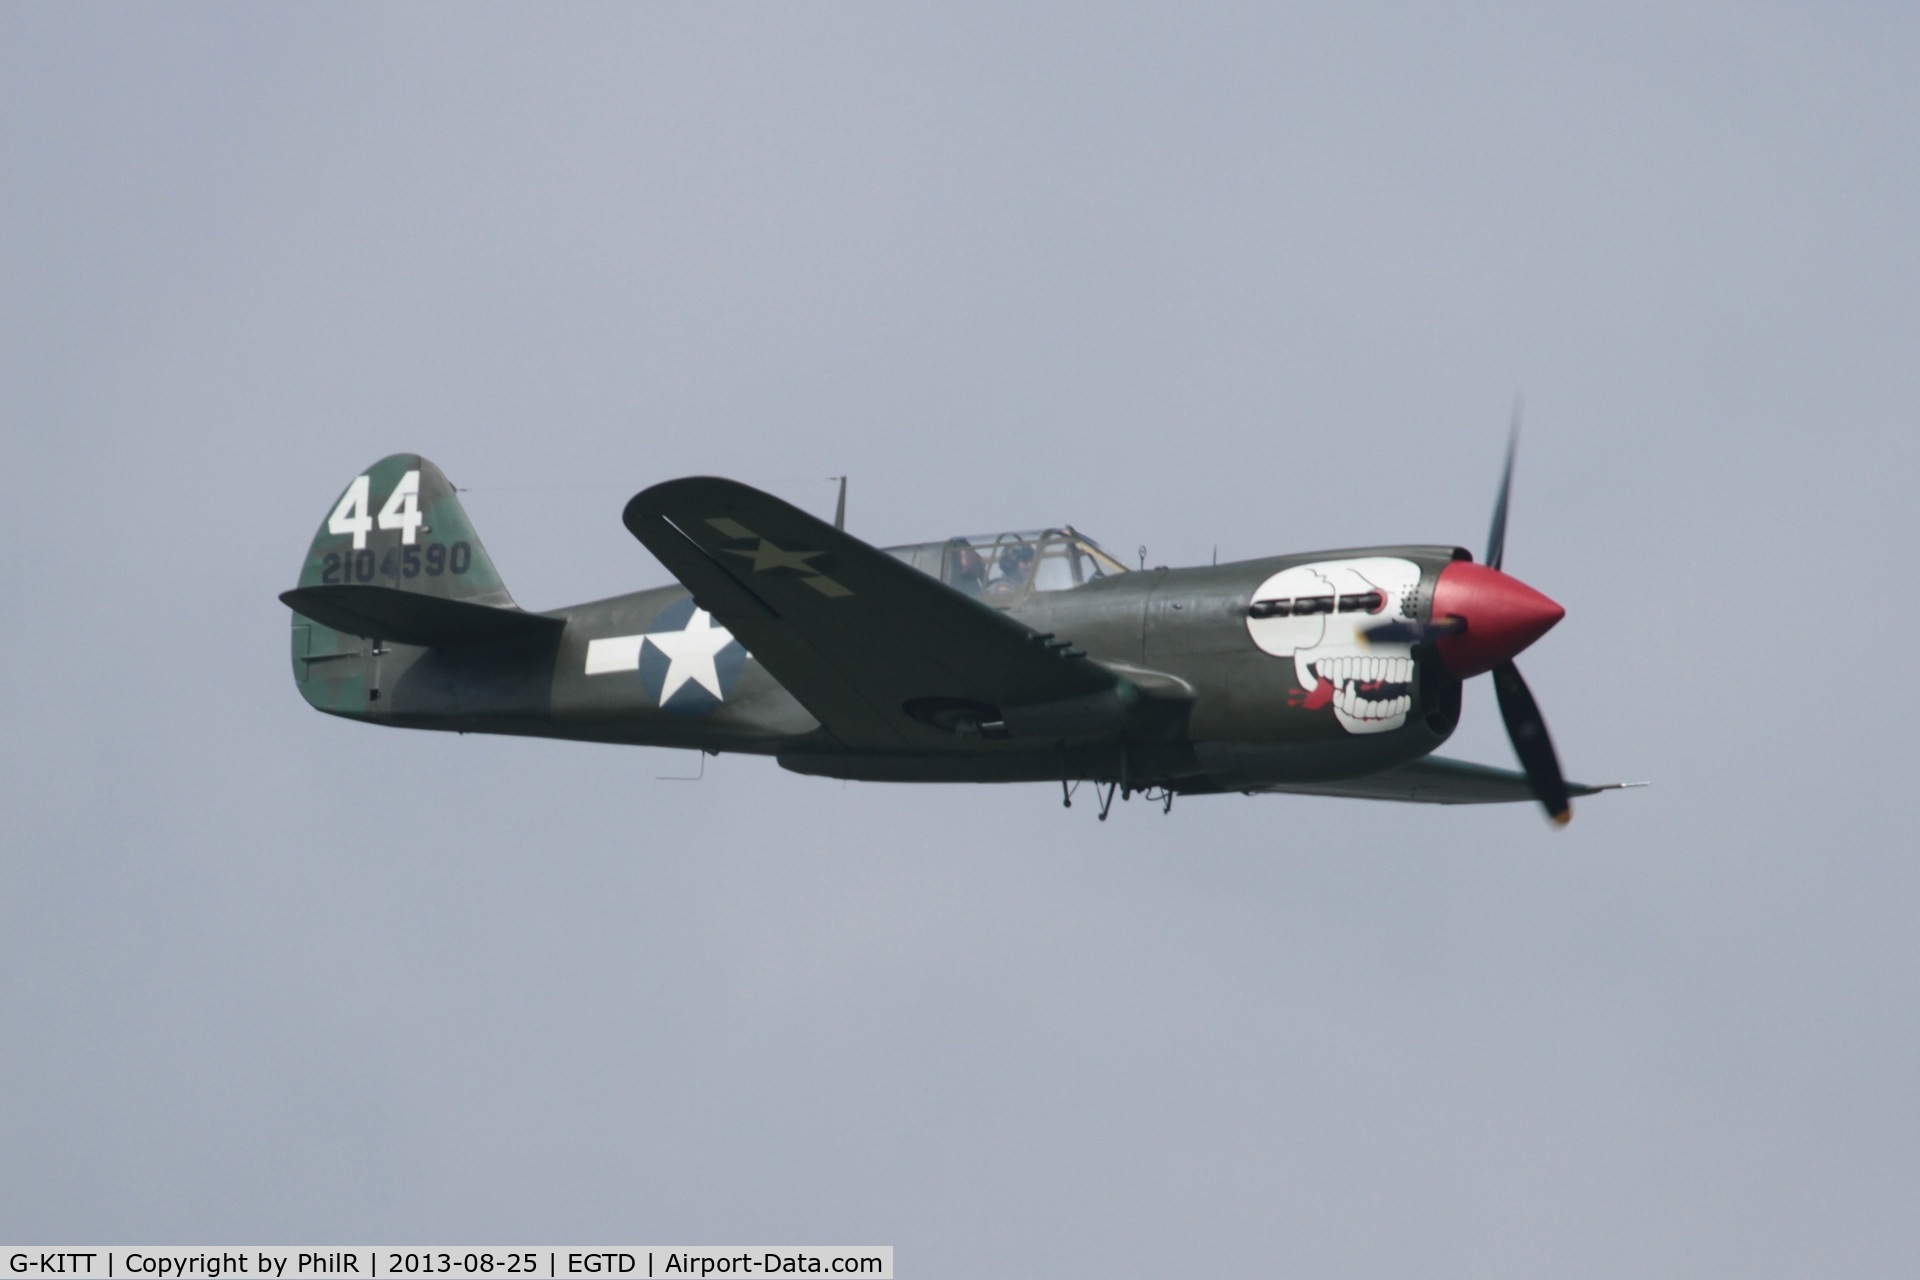 G-KITT, 1943 Curtiss P-40M Warhawk C/N 27490, Curtis P-40 Kittyhawk 2104590 G-KITT at Dunsfold